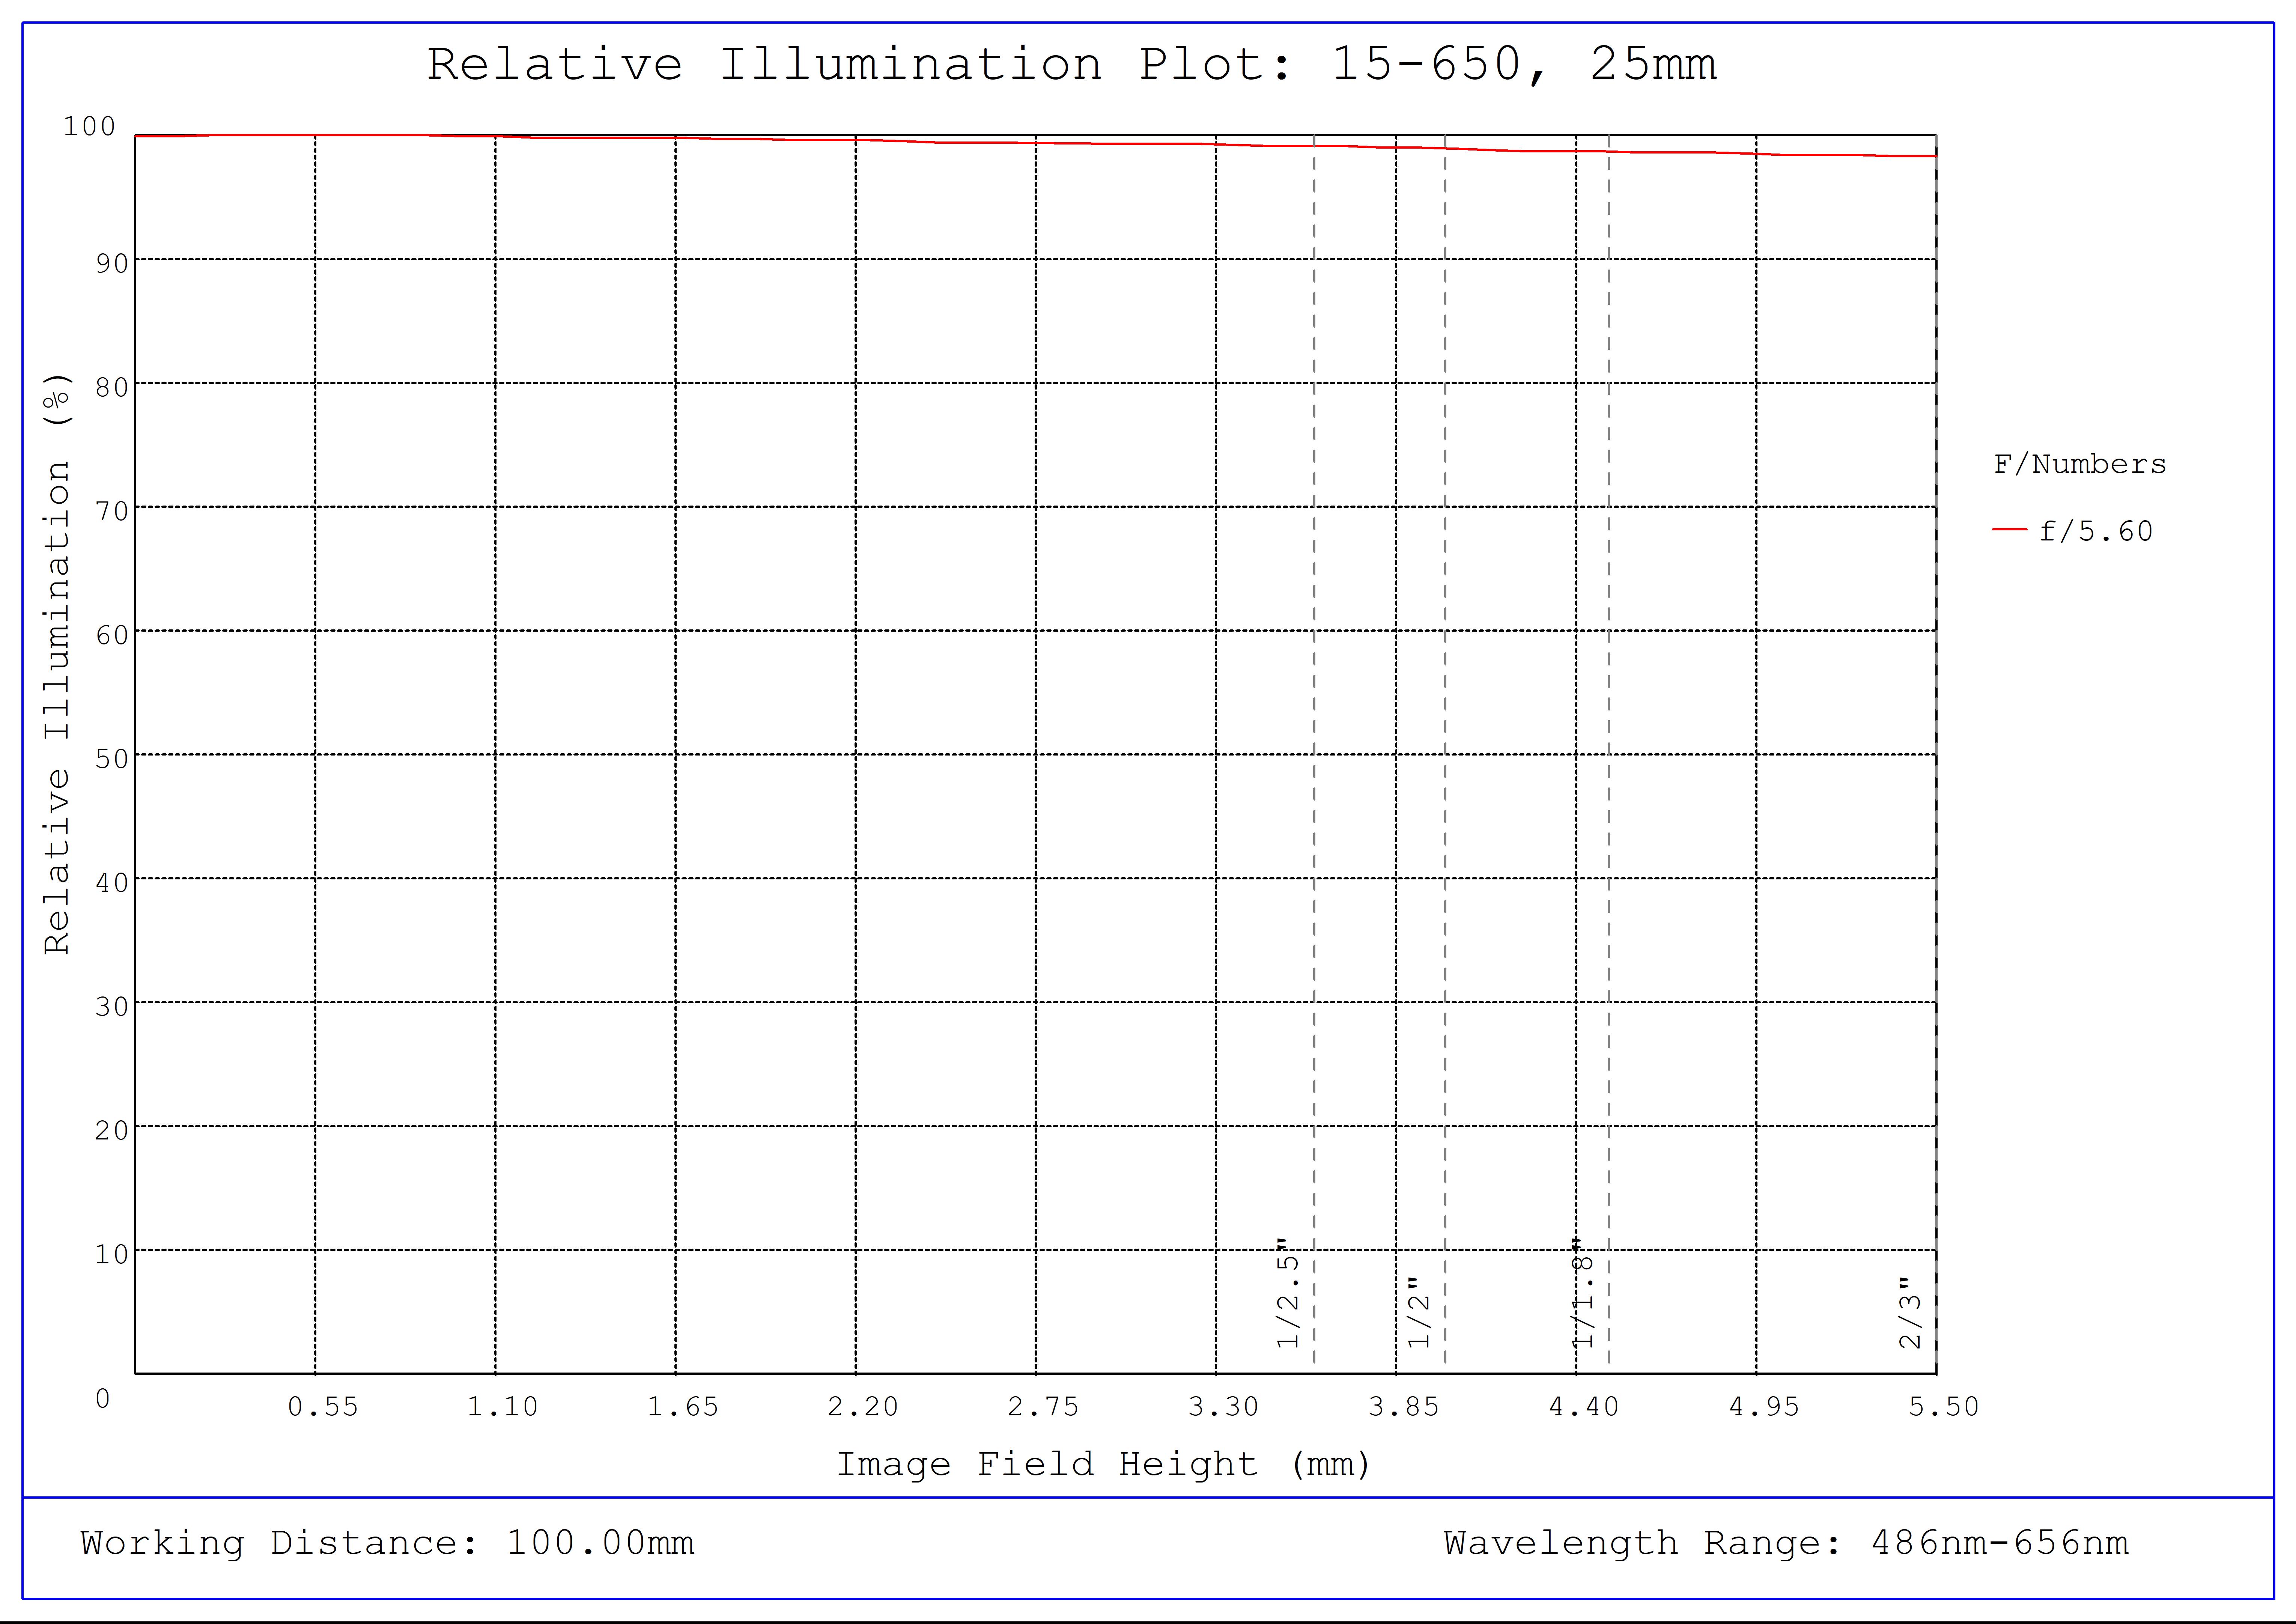 #15-650, 25mm, f/5.6 Cw Series Fixed Focal Length Lens, Relative Illumination Plot